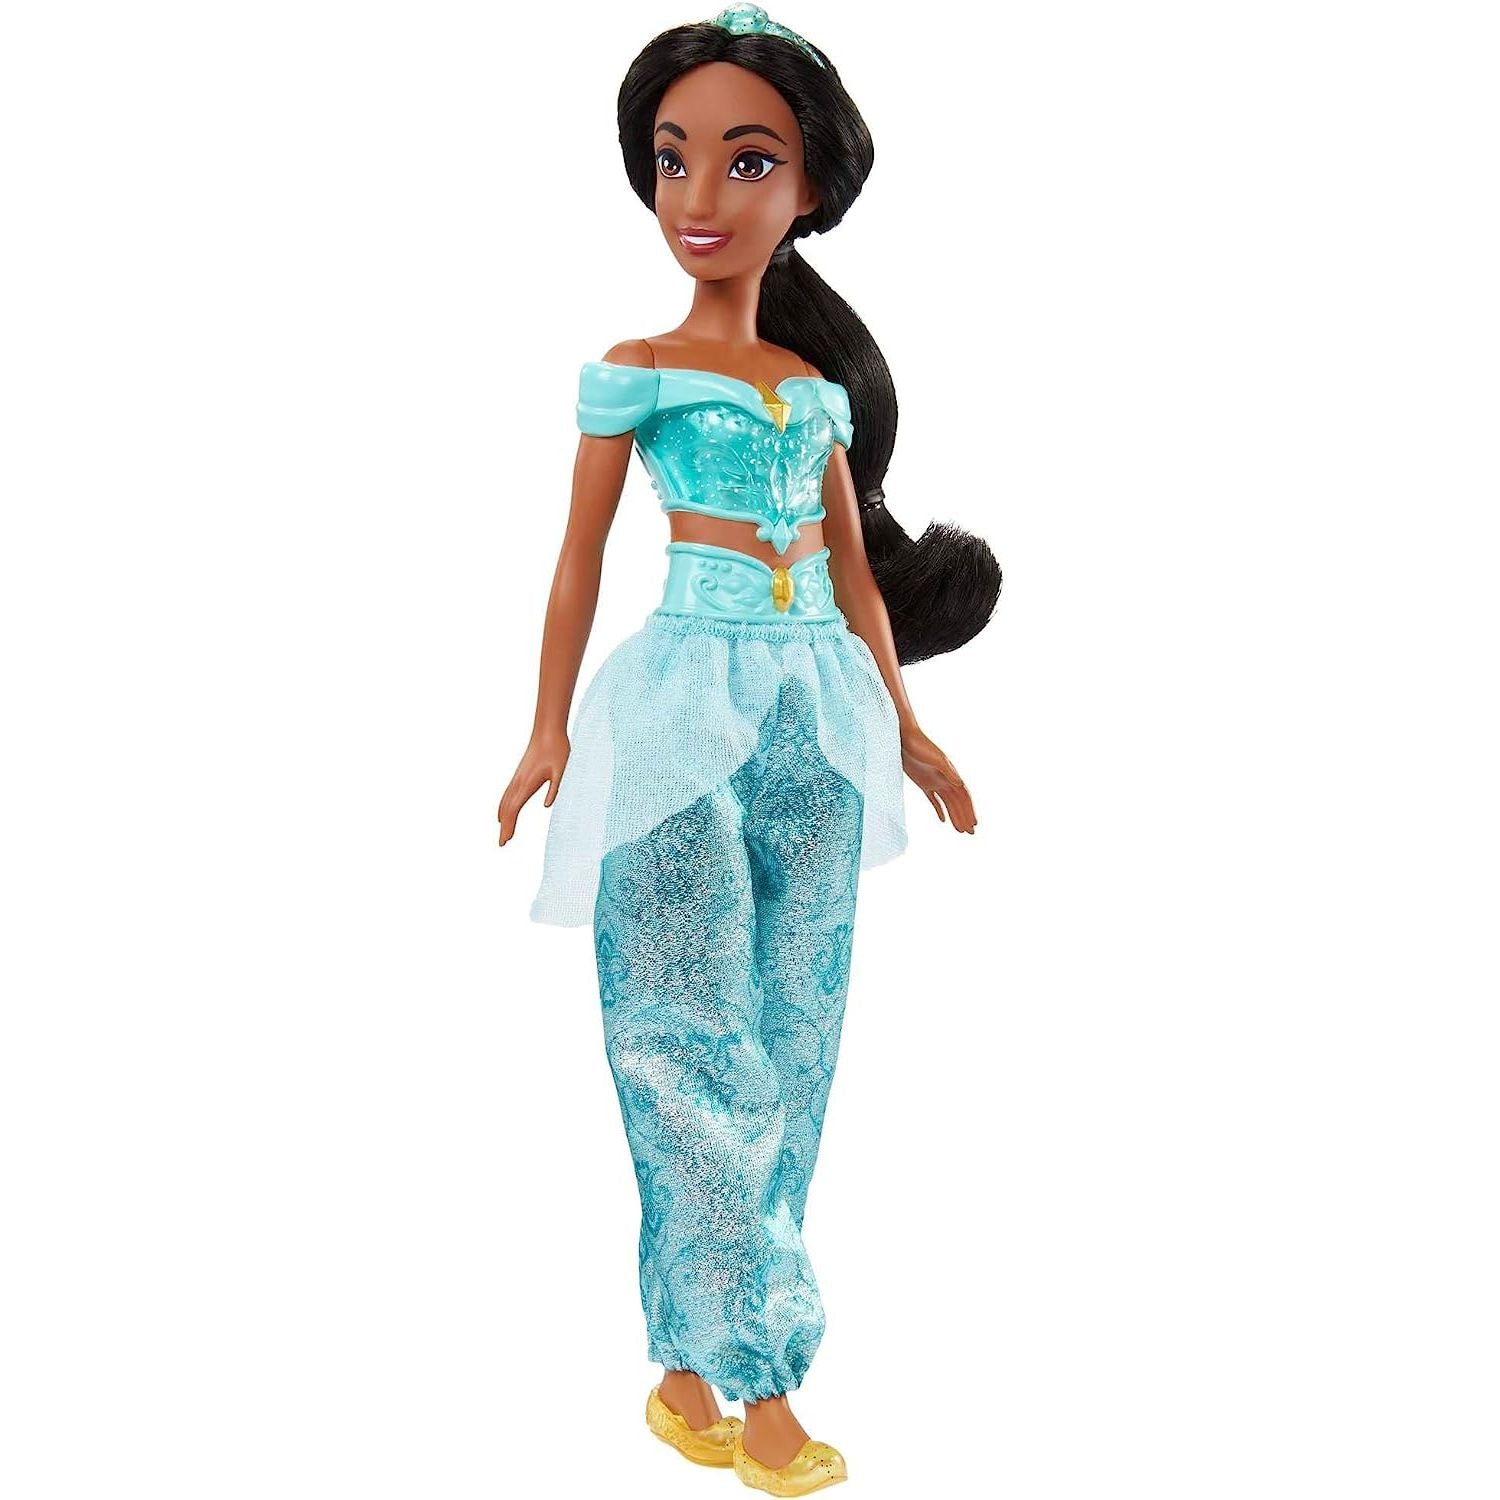 Mattel Disney Princess Jasmine Fashion Doll, Sparkling Look with Black Hair, Brown Eyes & Tiara Accessory